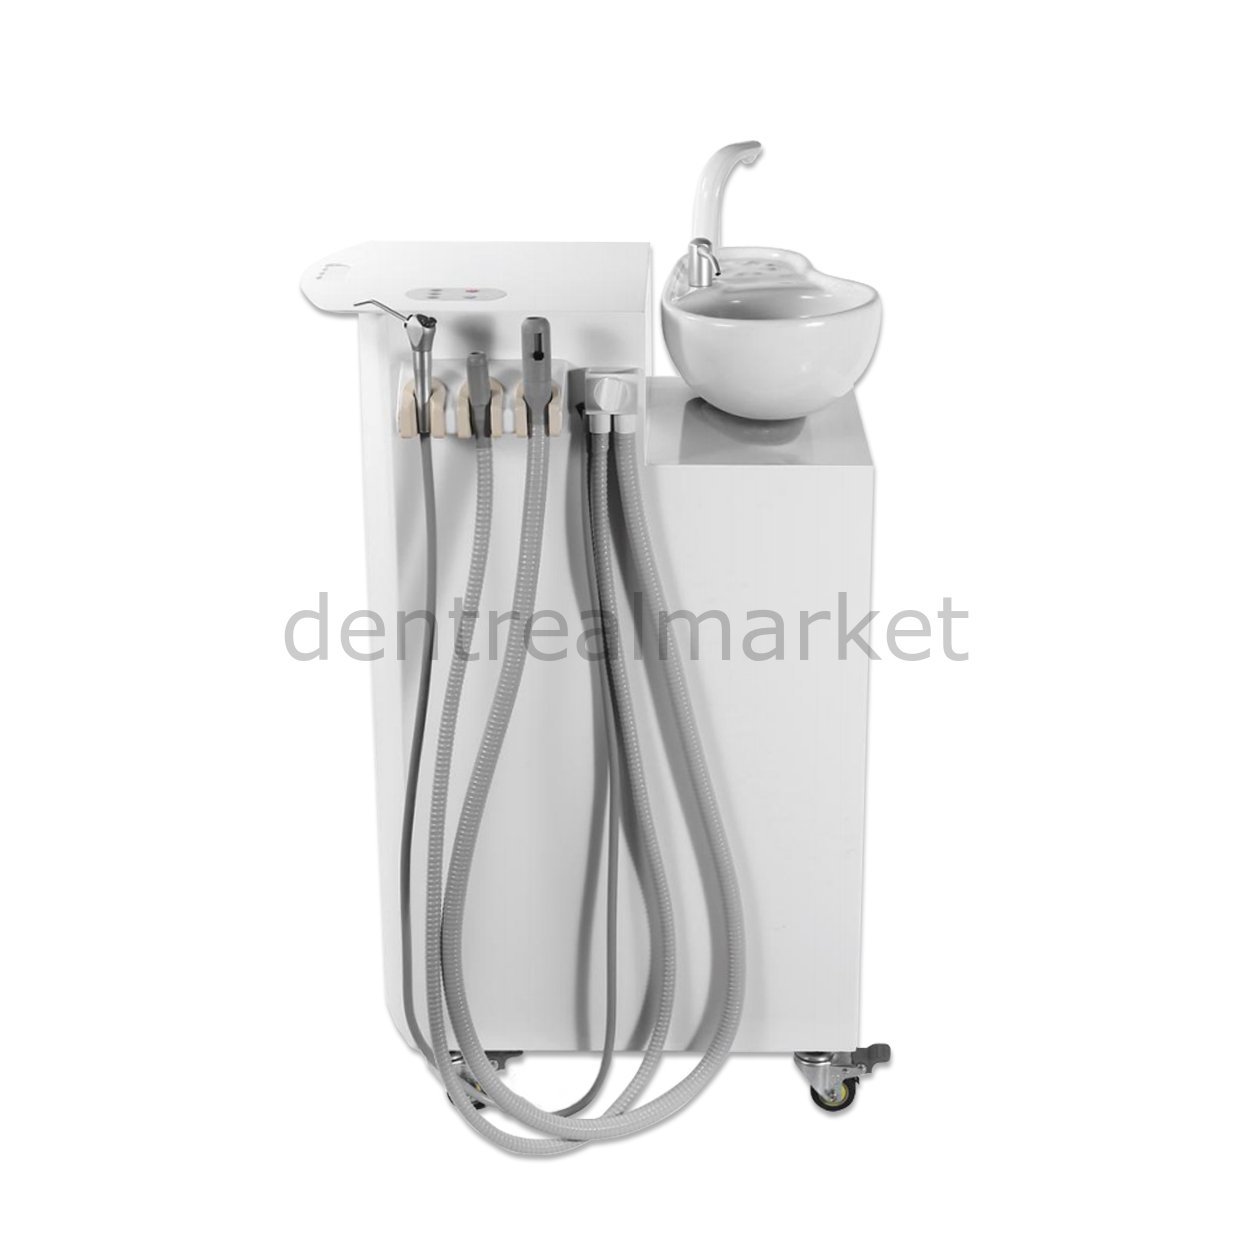 DentrealStore - Gladent Surgical Aspirator Mobile Suction Unit